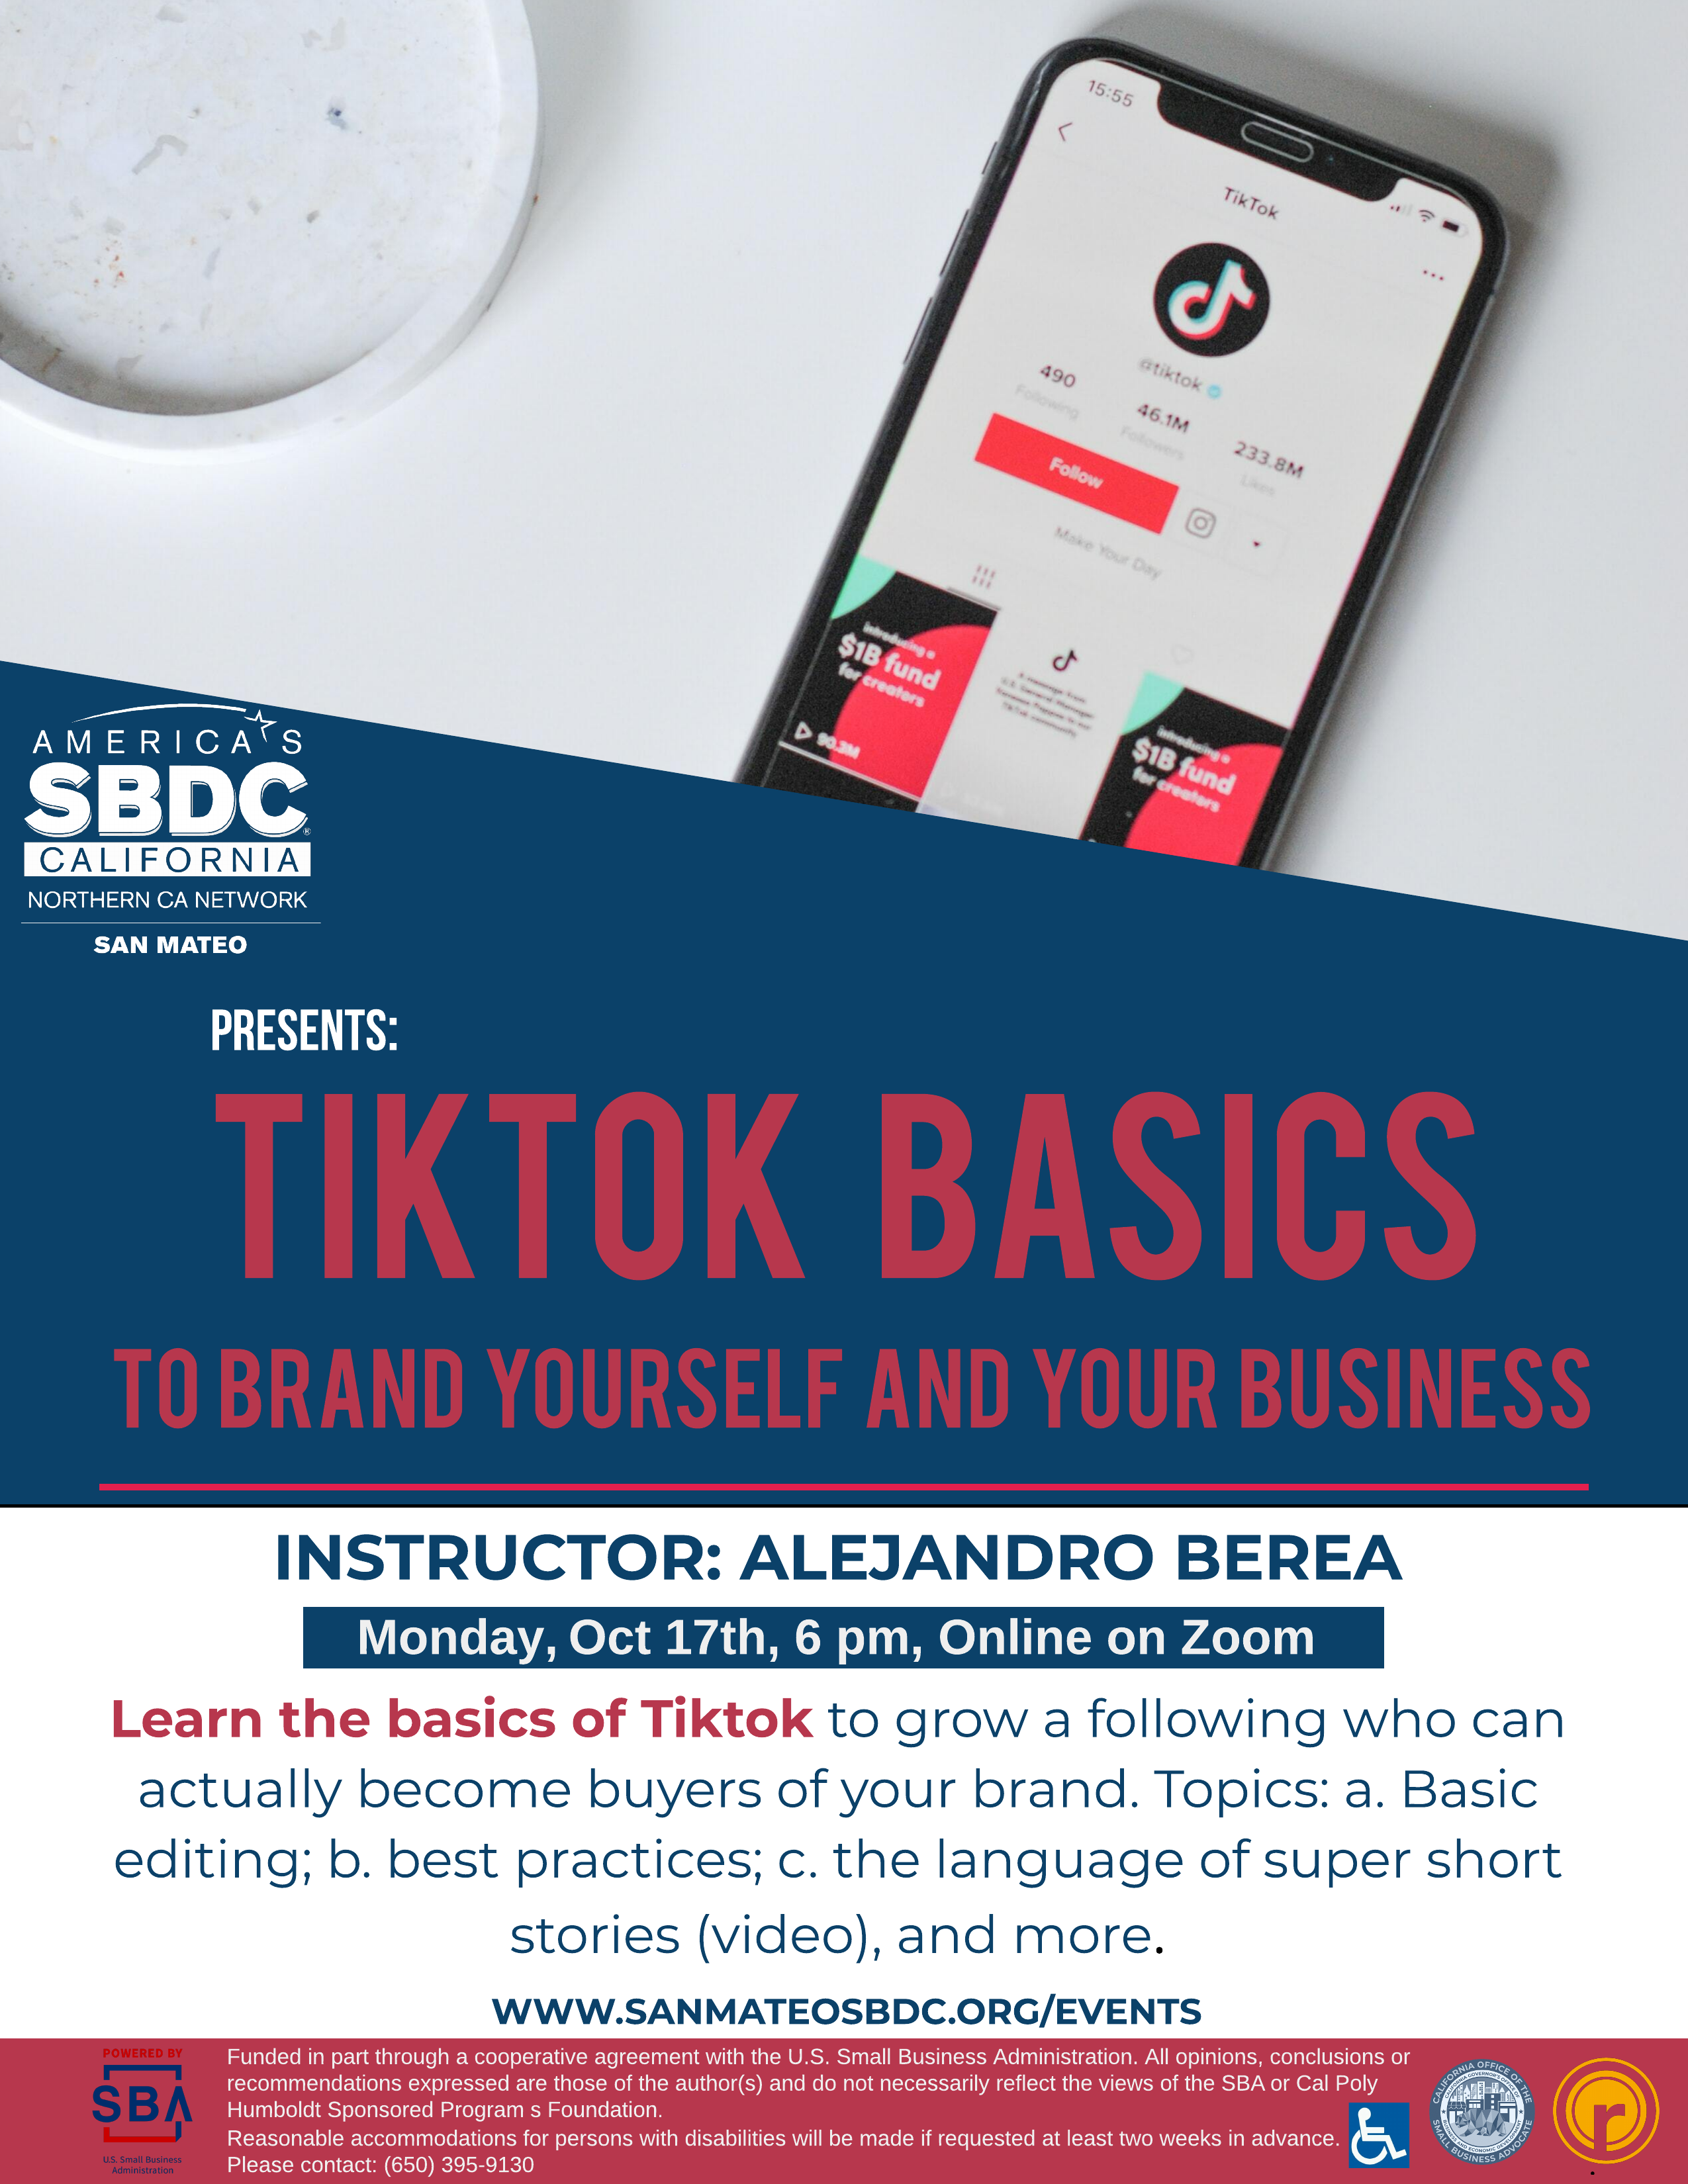 TikTok basics to brand yourself and your business. - San Mateo SBDC